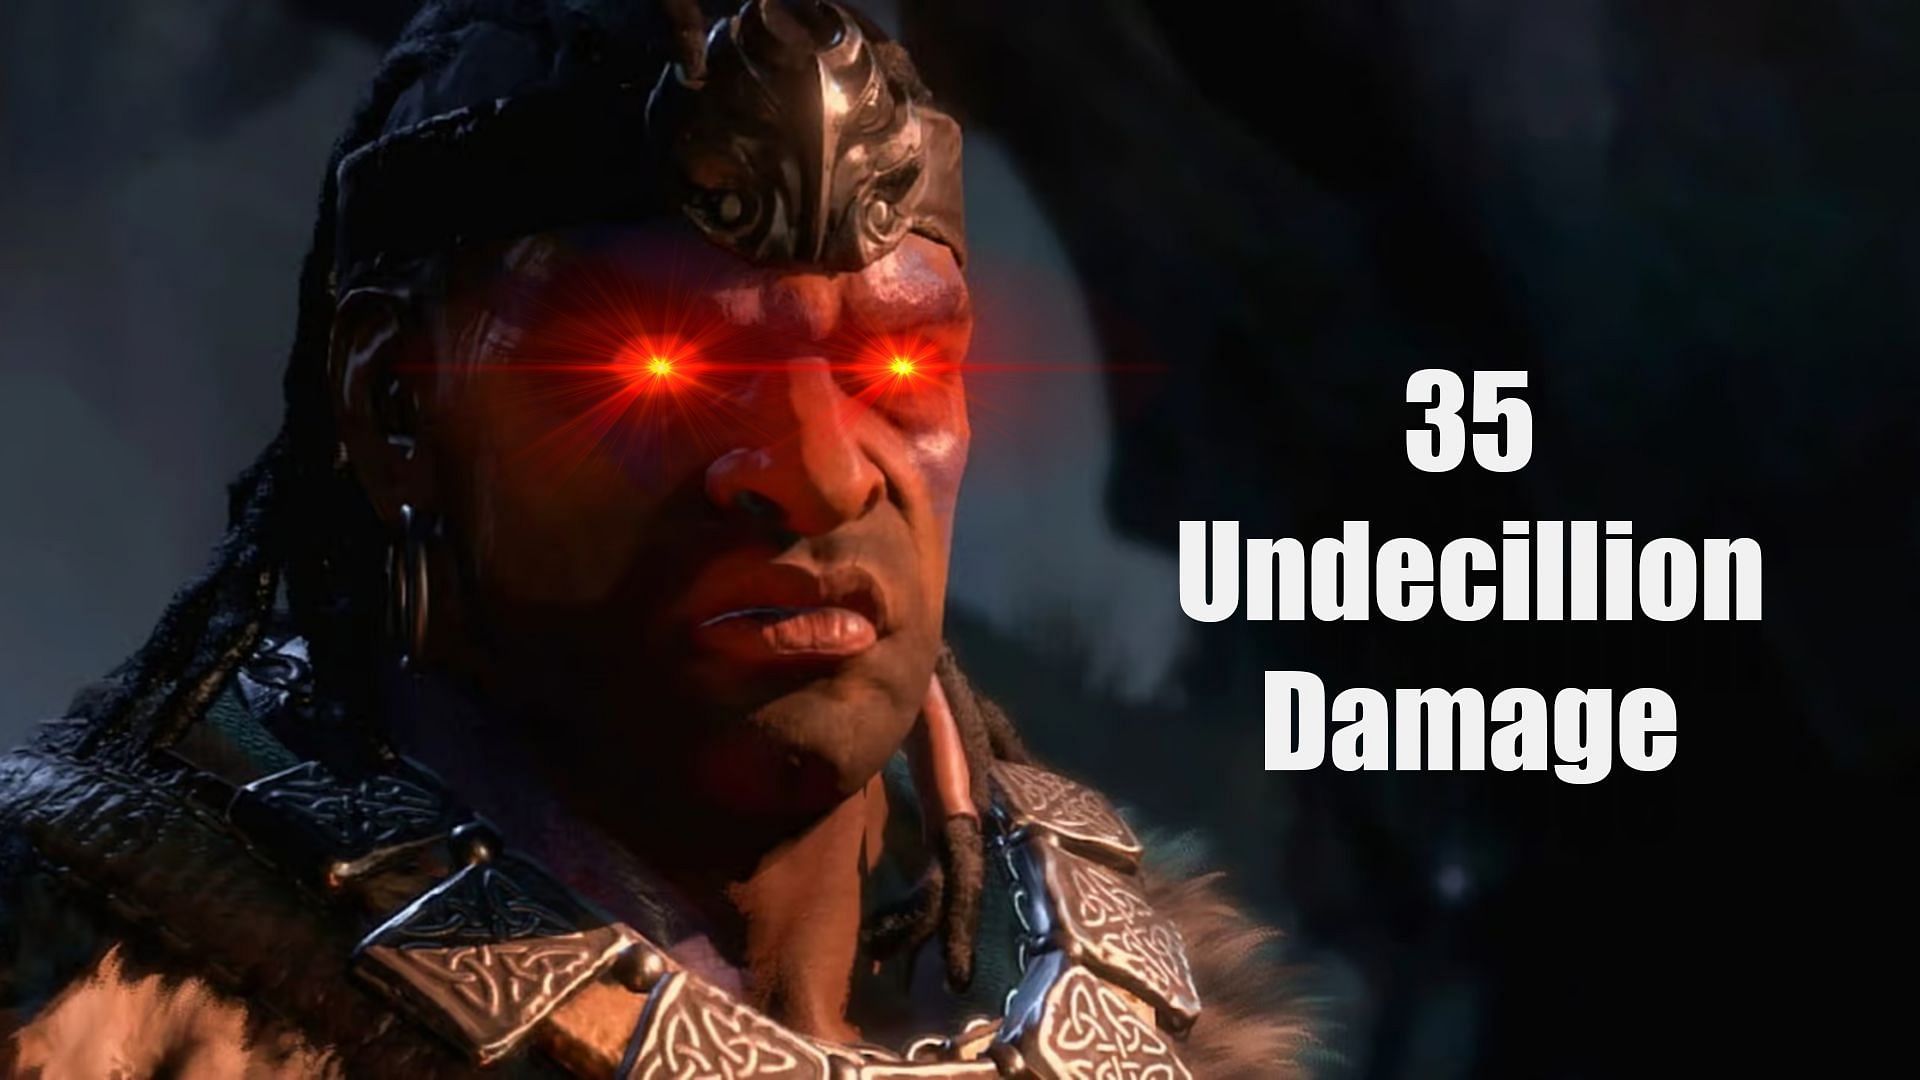 Barbarian 35 undecillion damage